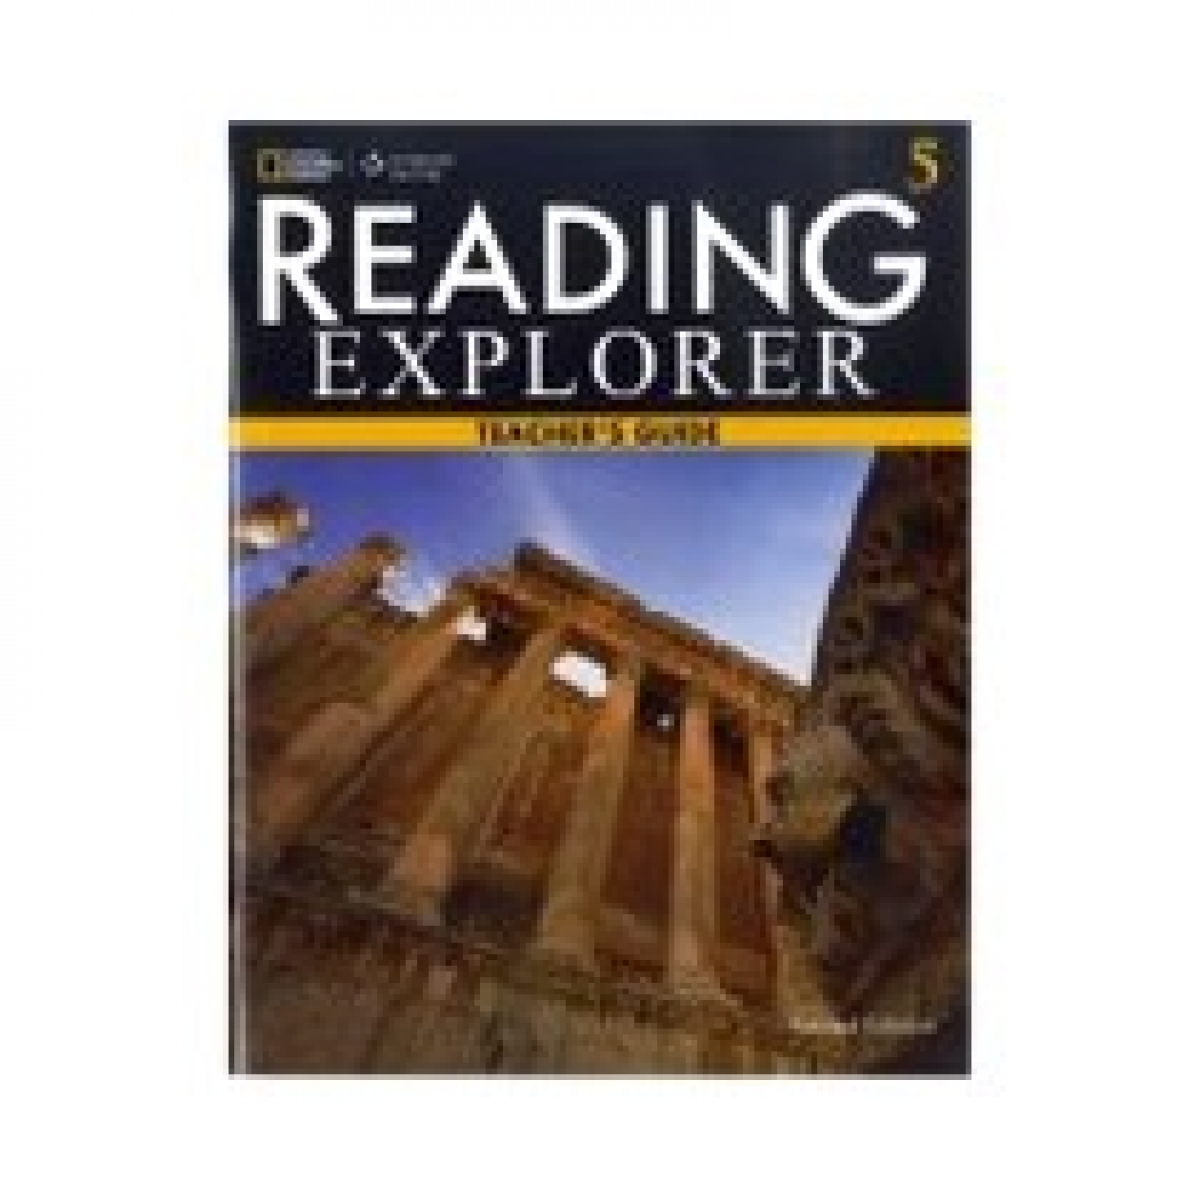 Reading explorer 5